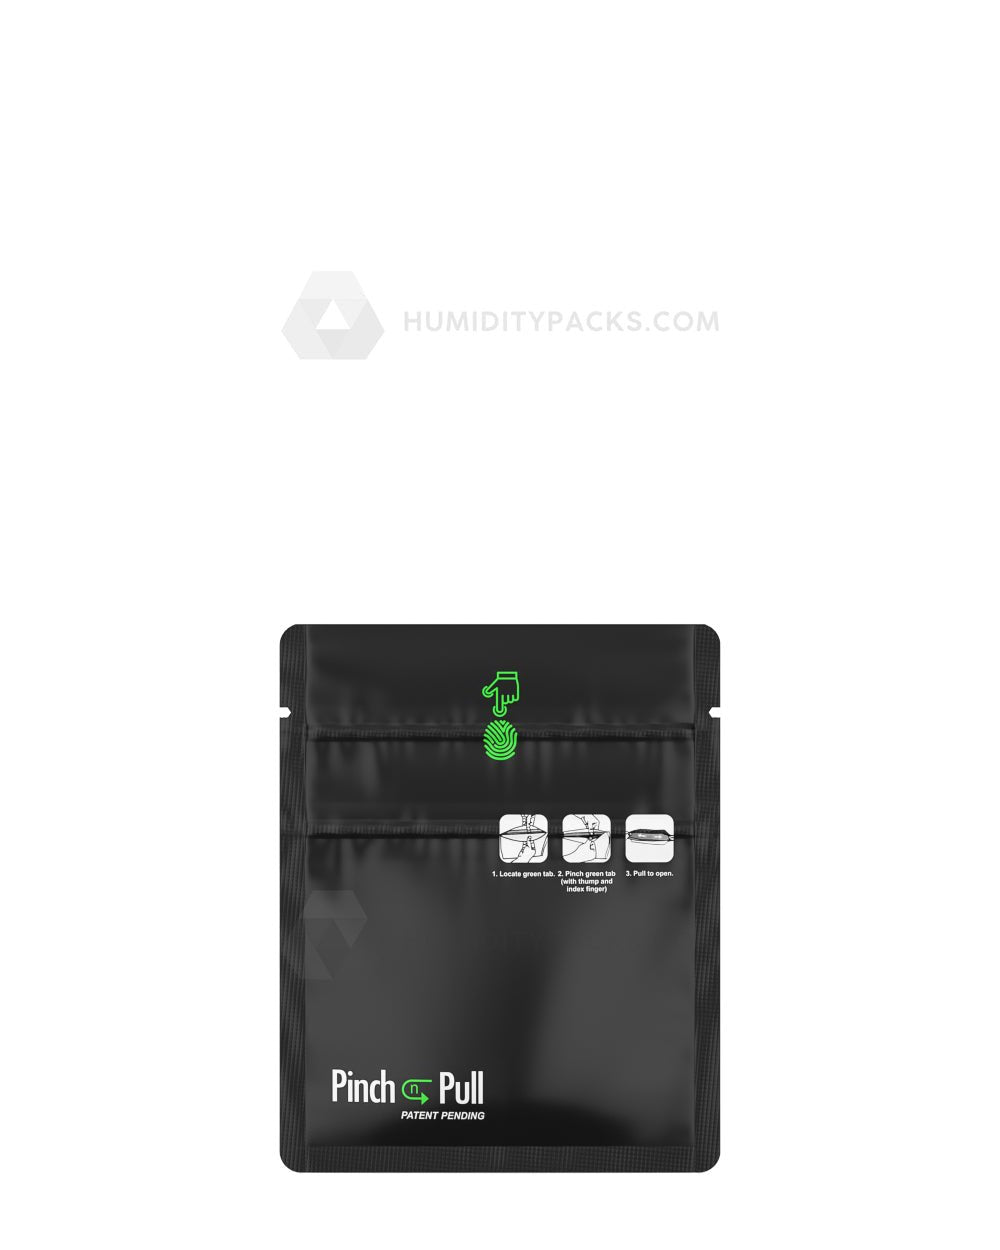 Matte-Black 3.6" x 4.5" Pinch N Pull Mylar Child Resistant & Tamper Evident Bags (1 Gram) 250/Box Humidity Packs - 2